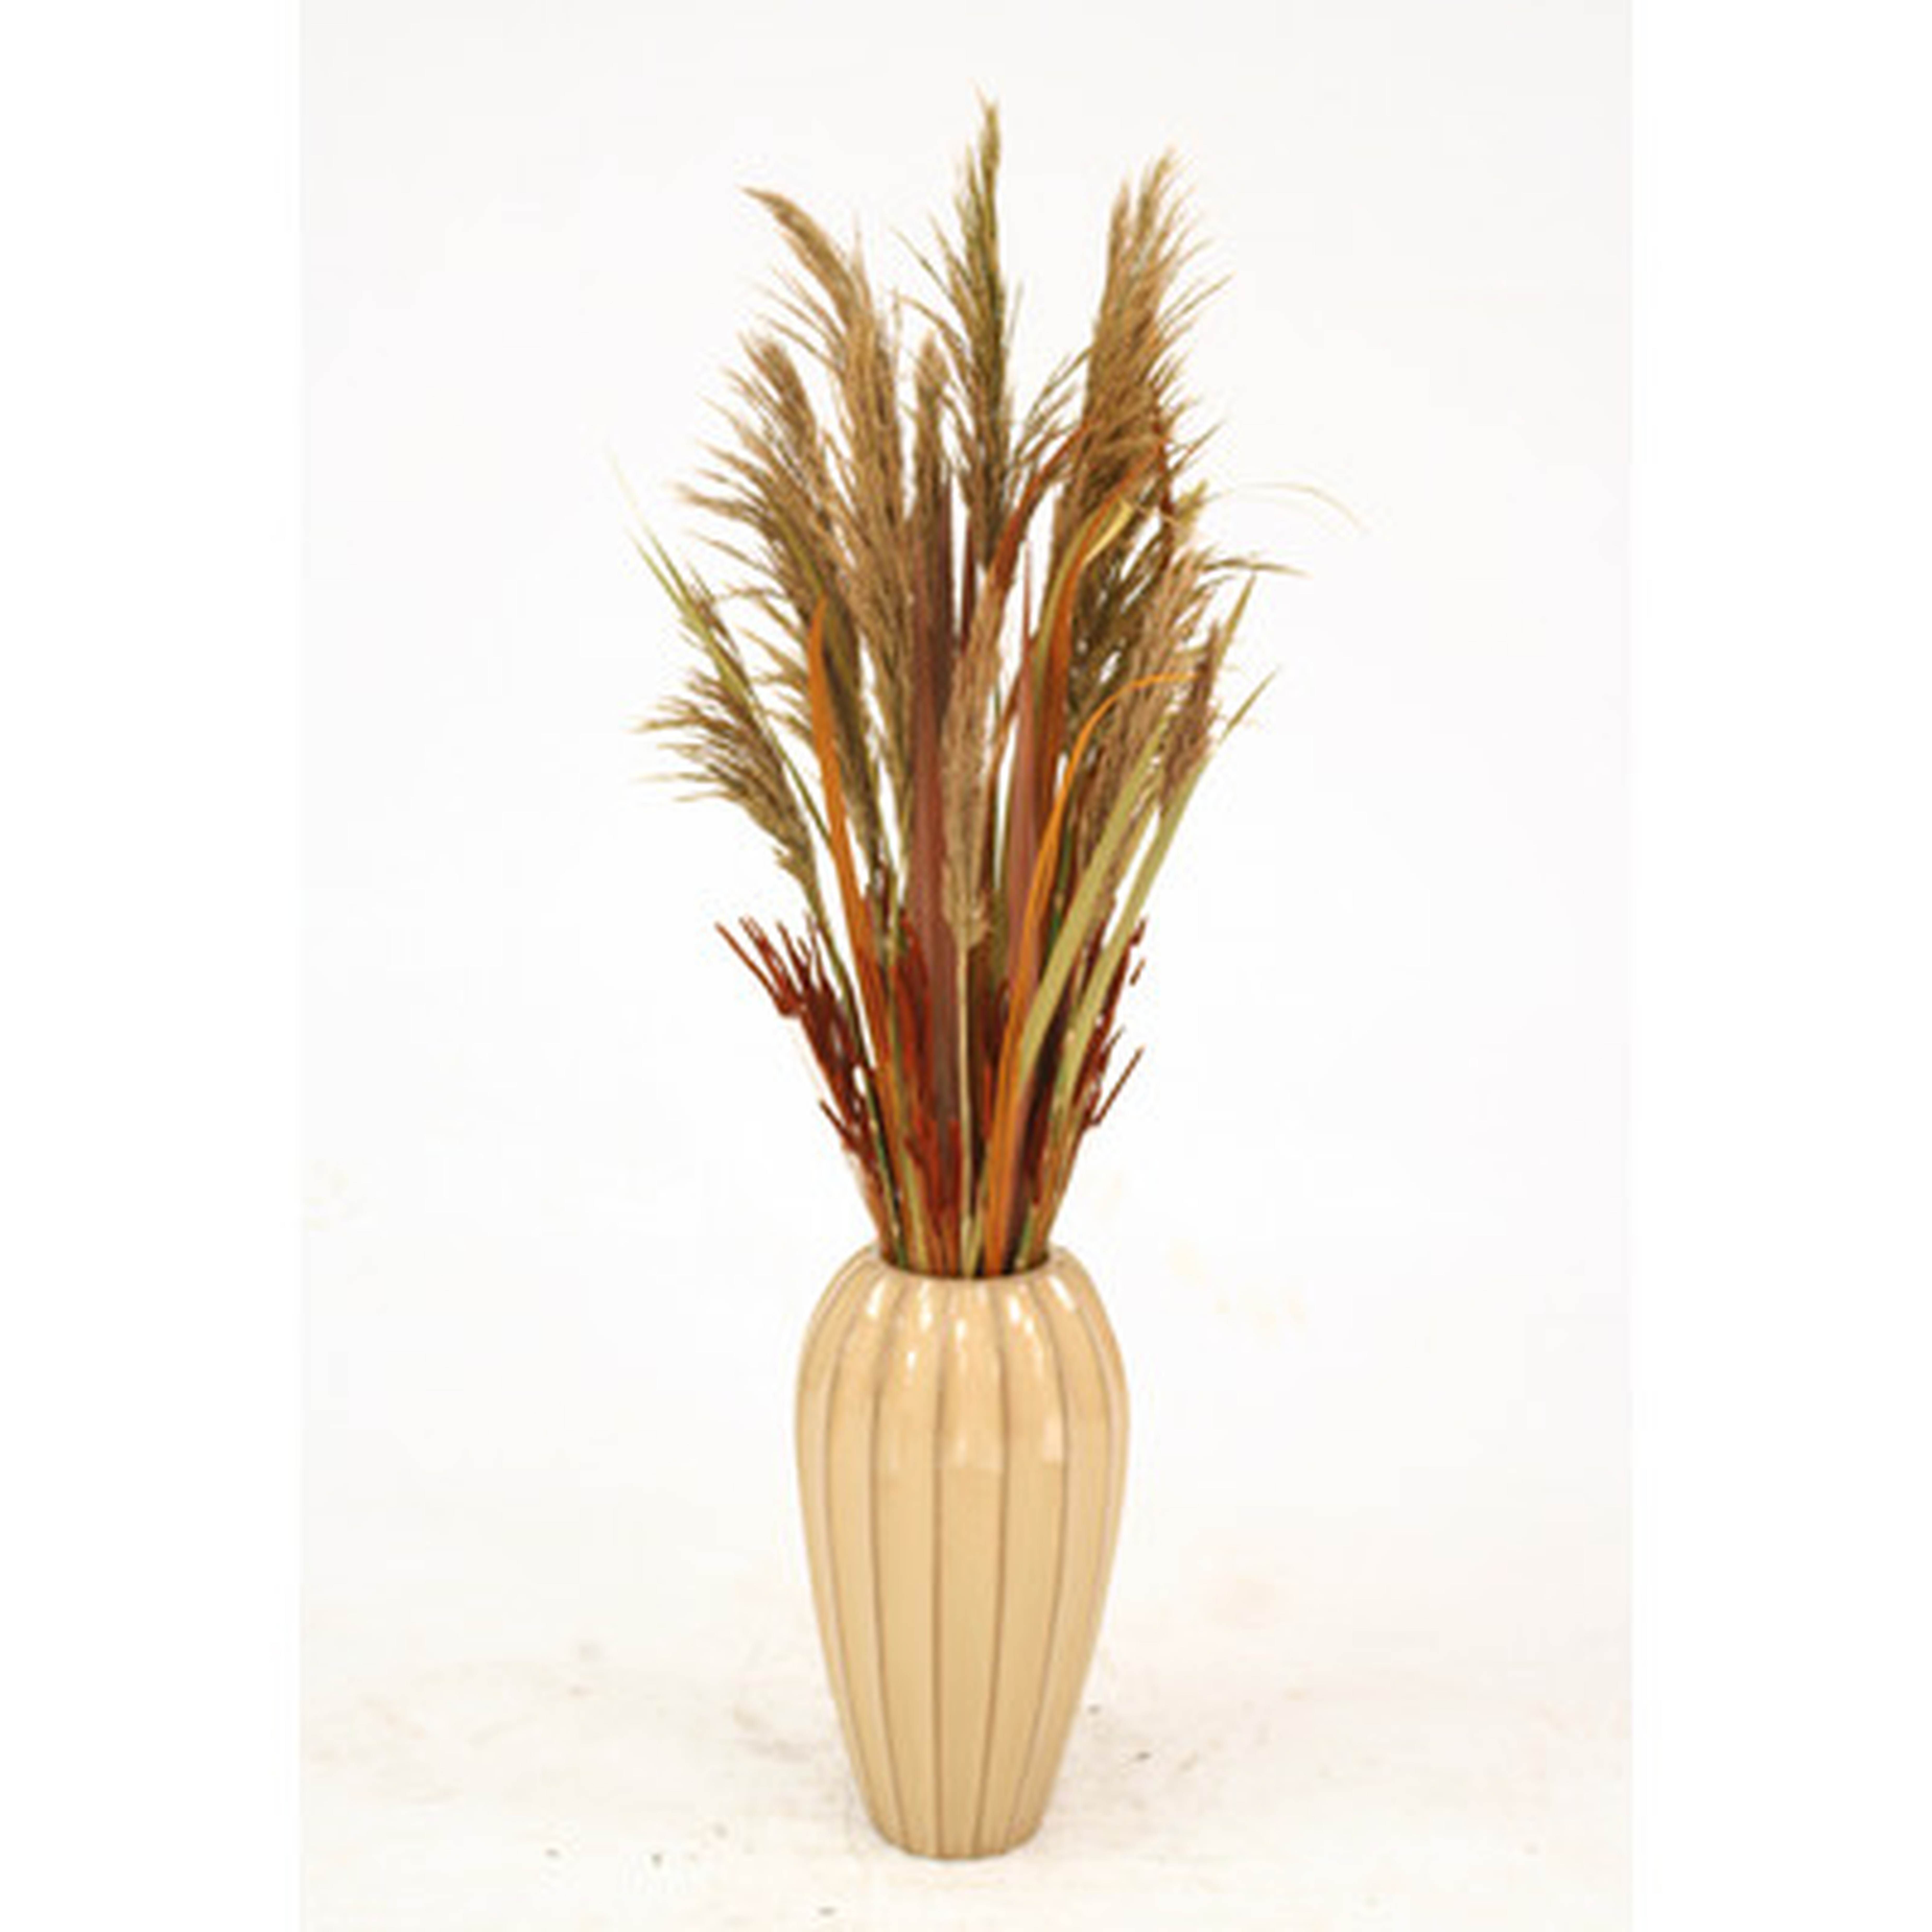 Dried Grass Desk Top Plant in Decorative Vase - Wayfair